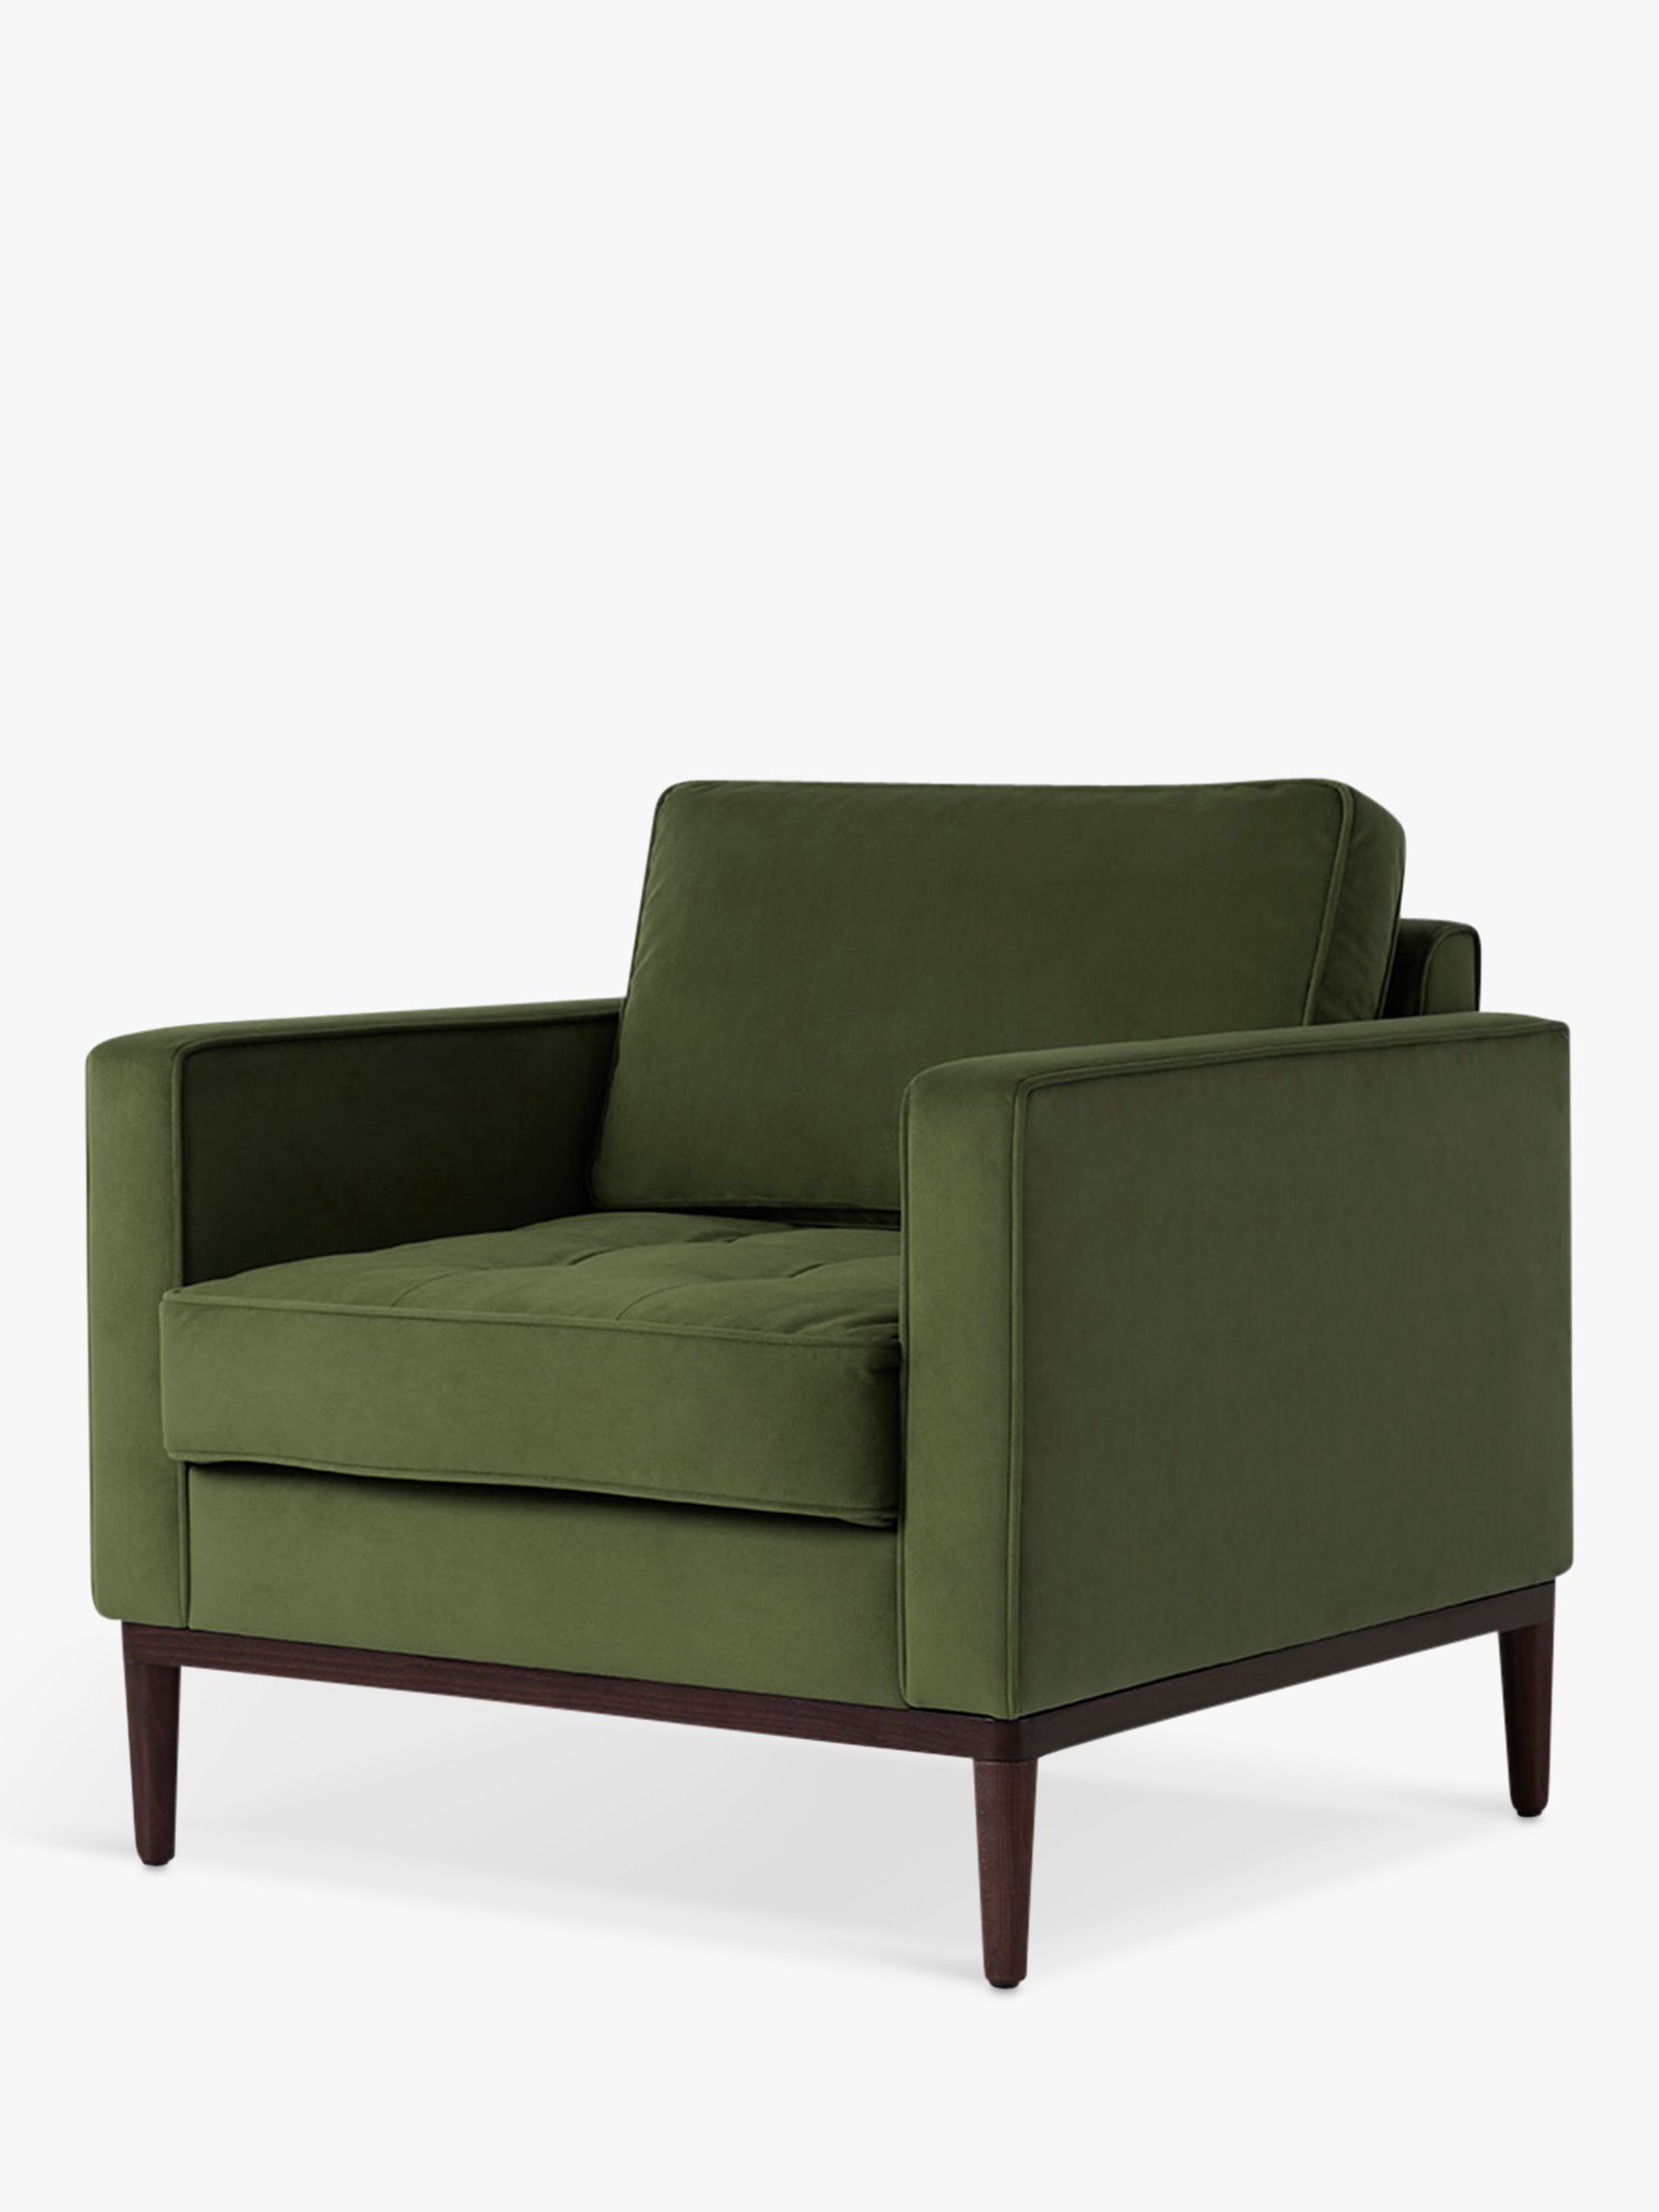 Photo of Swyft model 02 armchair